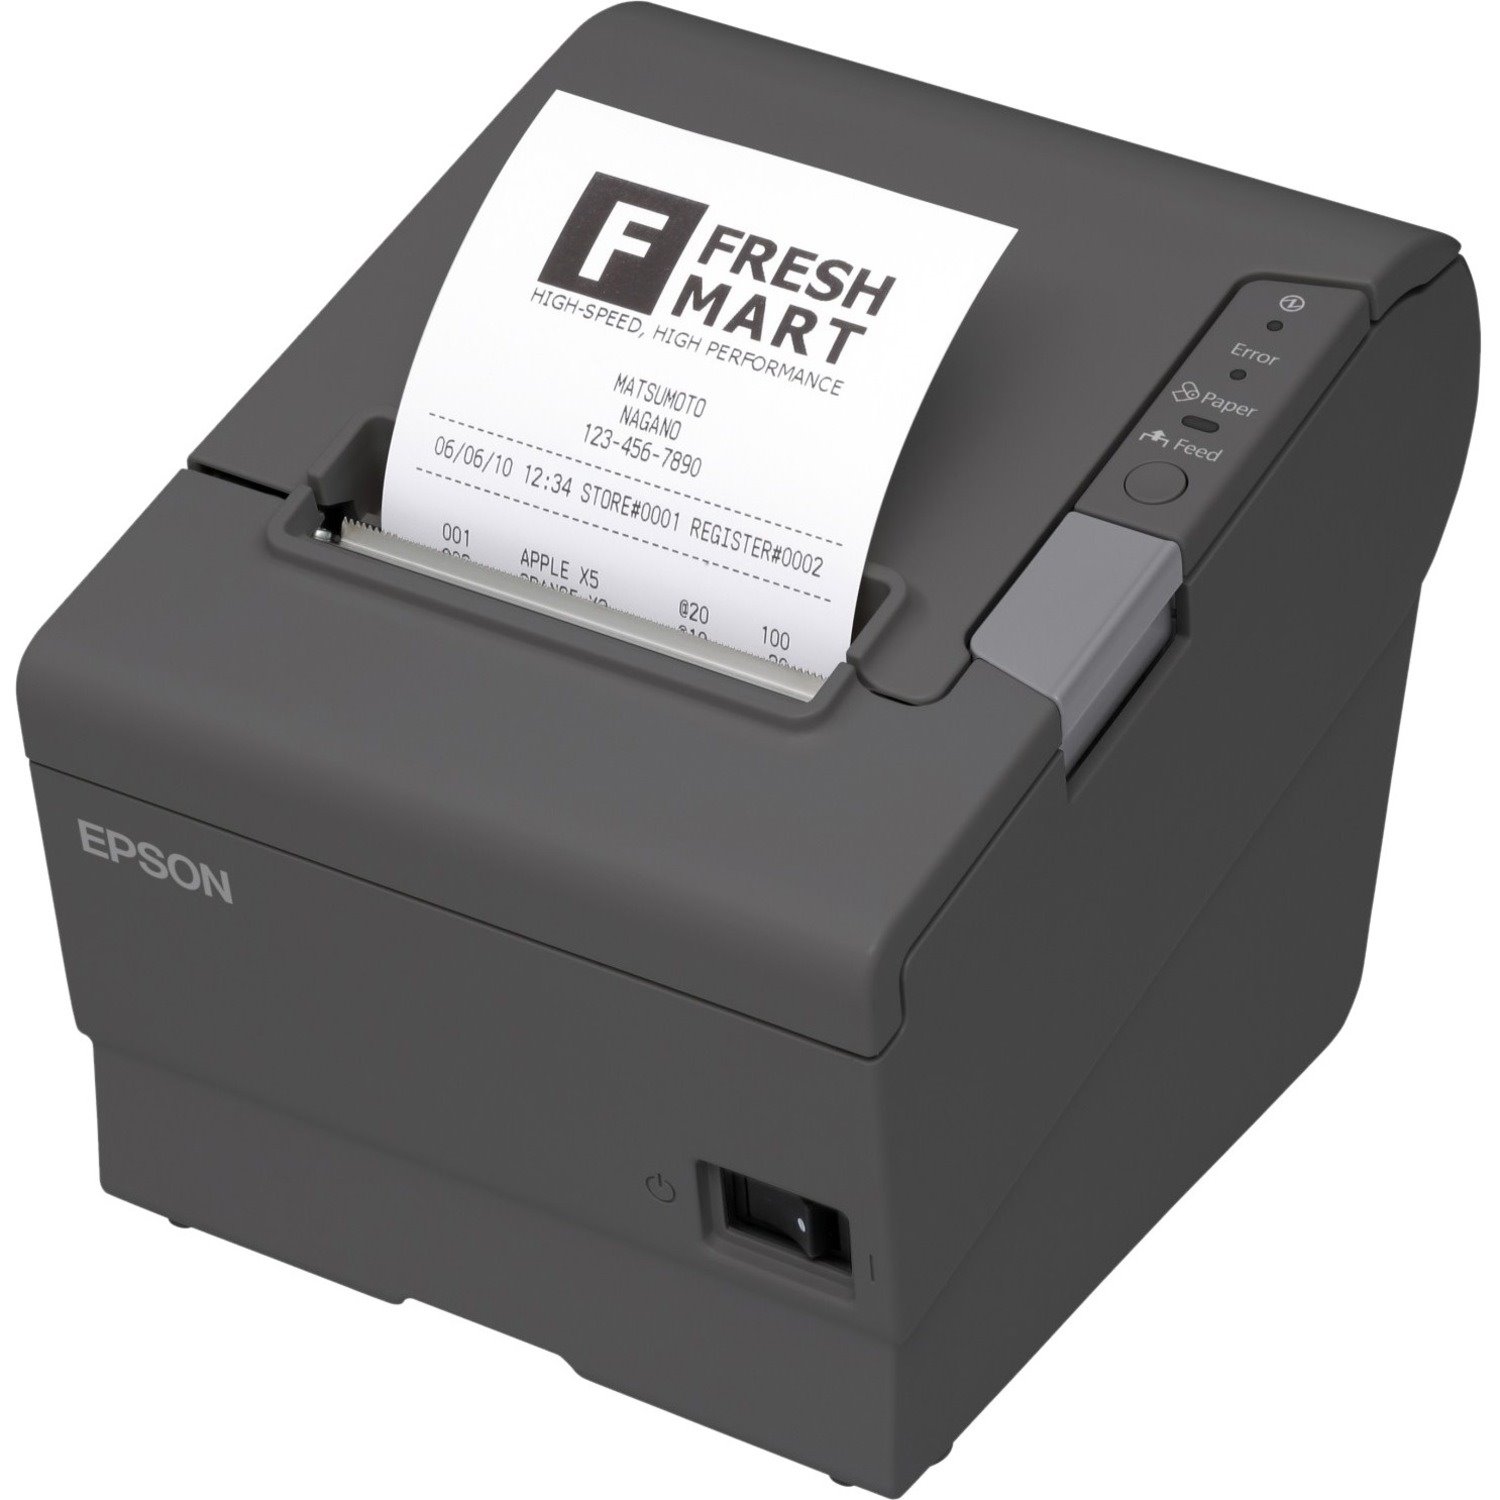 Epson TM-T88VI Desktop Direct Thermal Printer - Monochrome - Receipt Print - Ethernet - USB